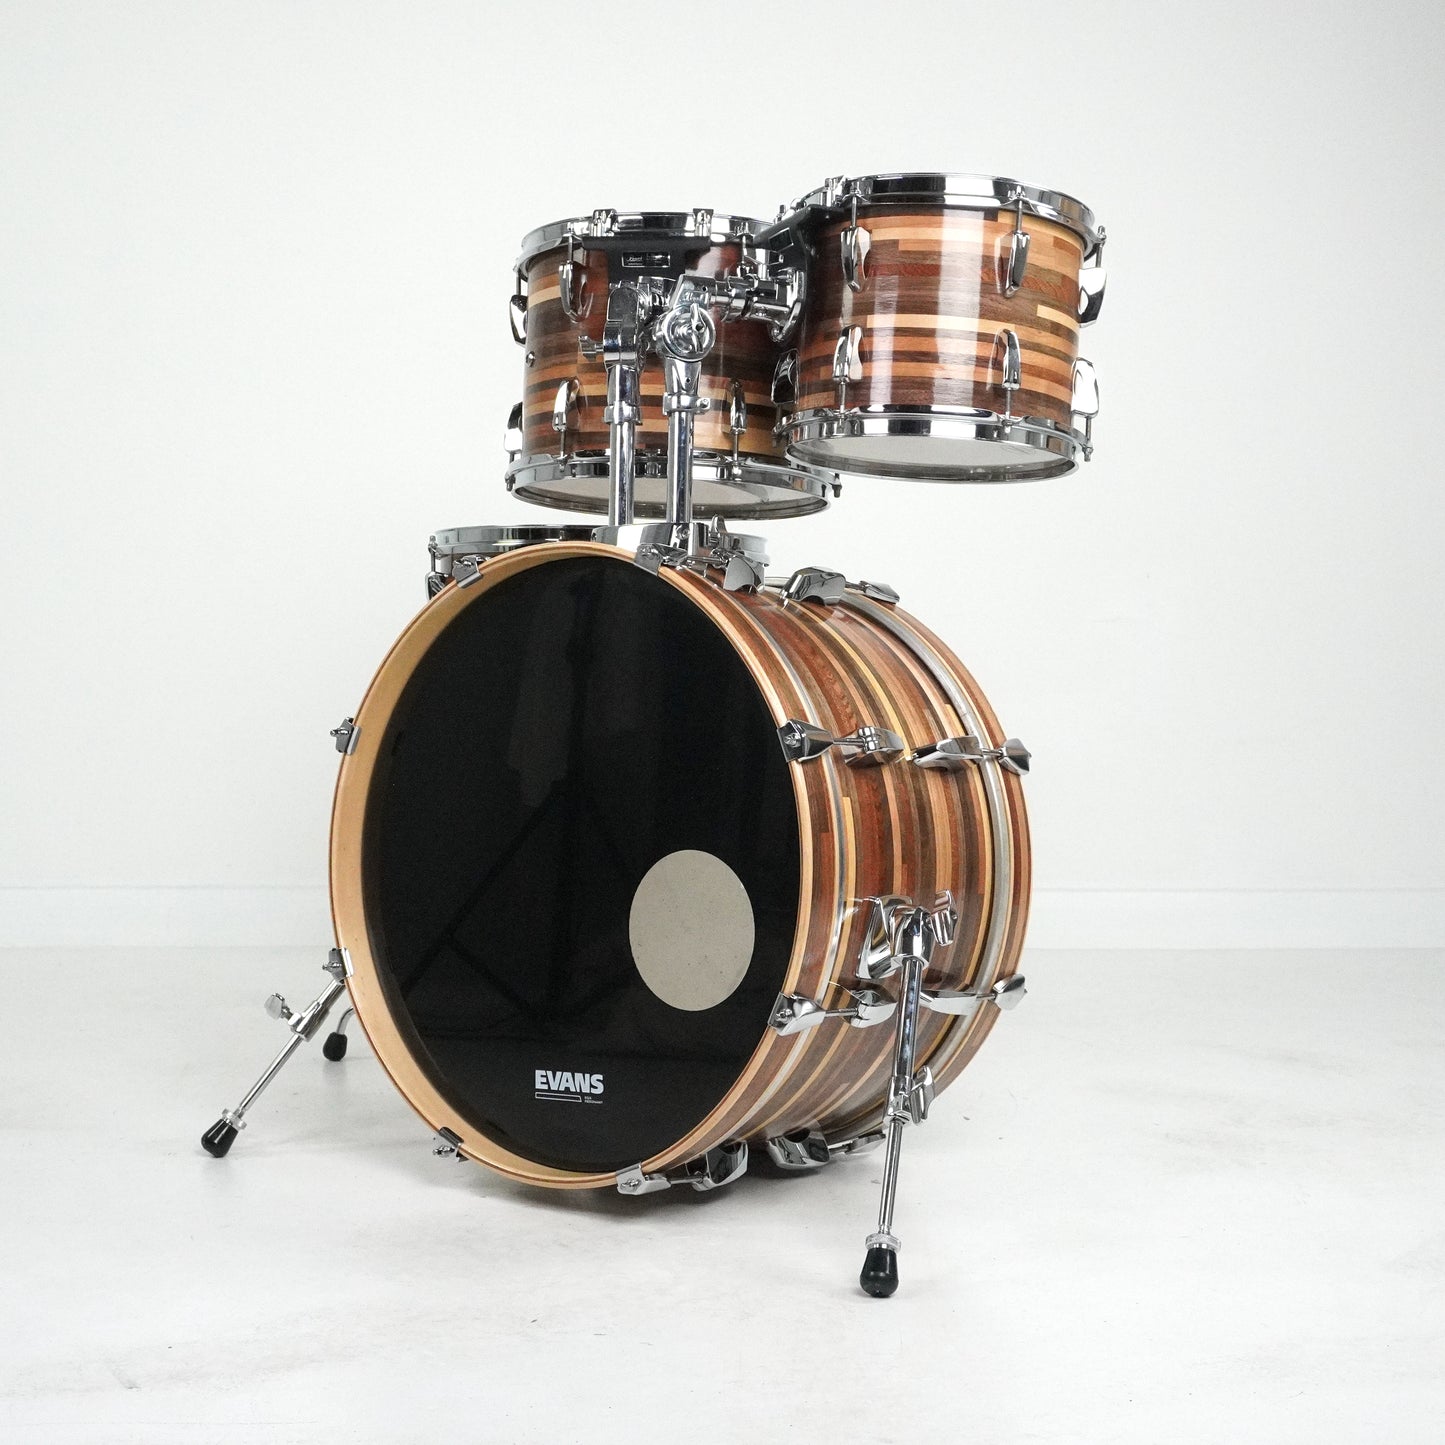 Pearl Export 4-Piece Drum Kit with Custom Bunta Ligna Wood Veneer